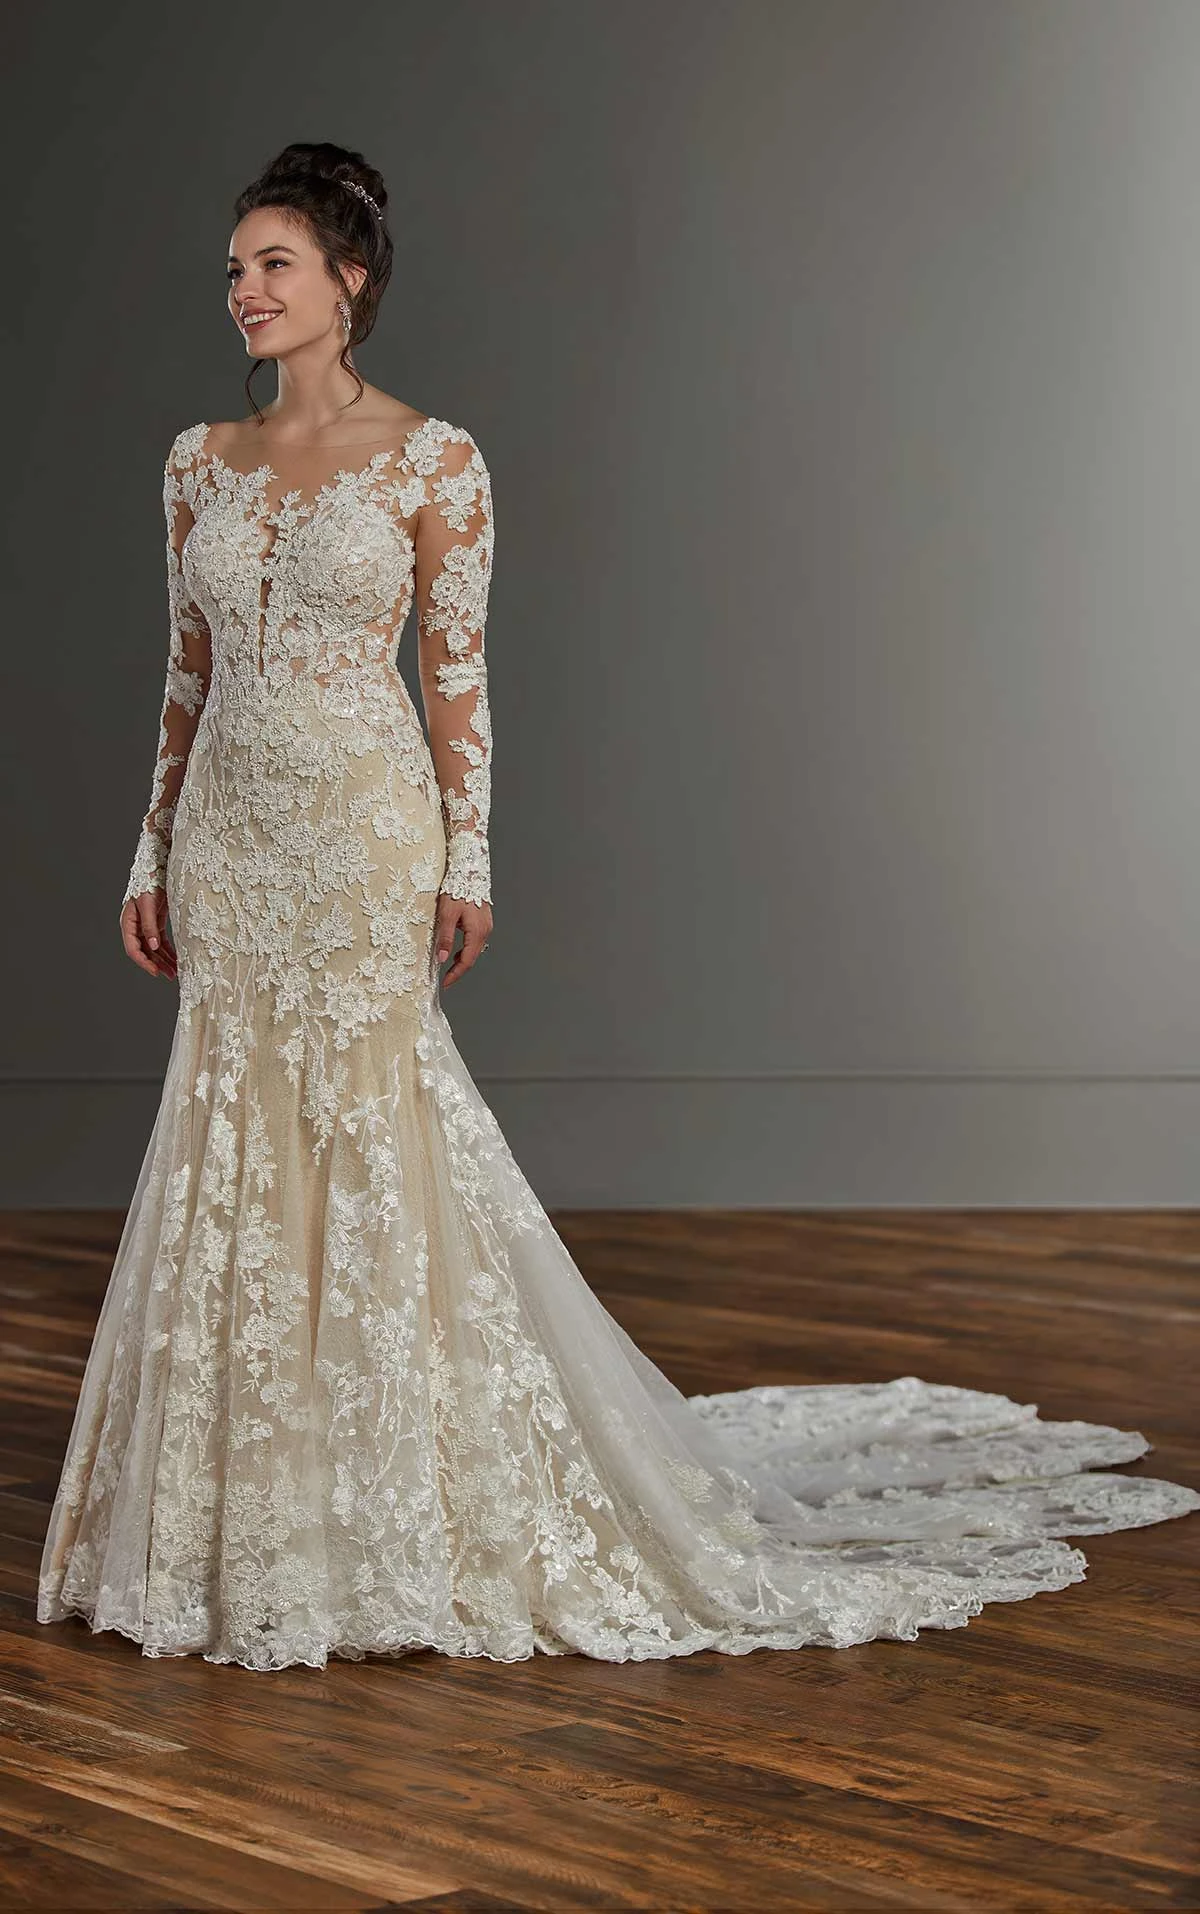 1119 Martina Liana Flourishing Lace Wedding Gown with